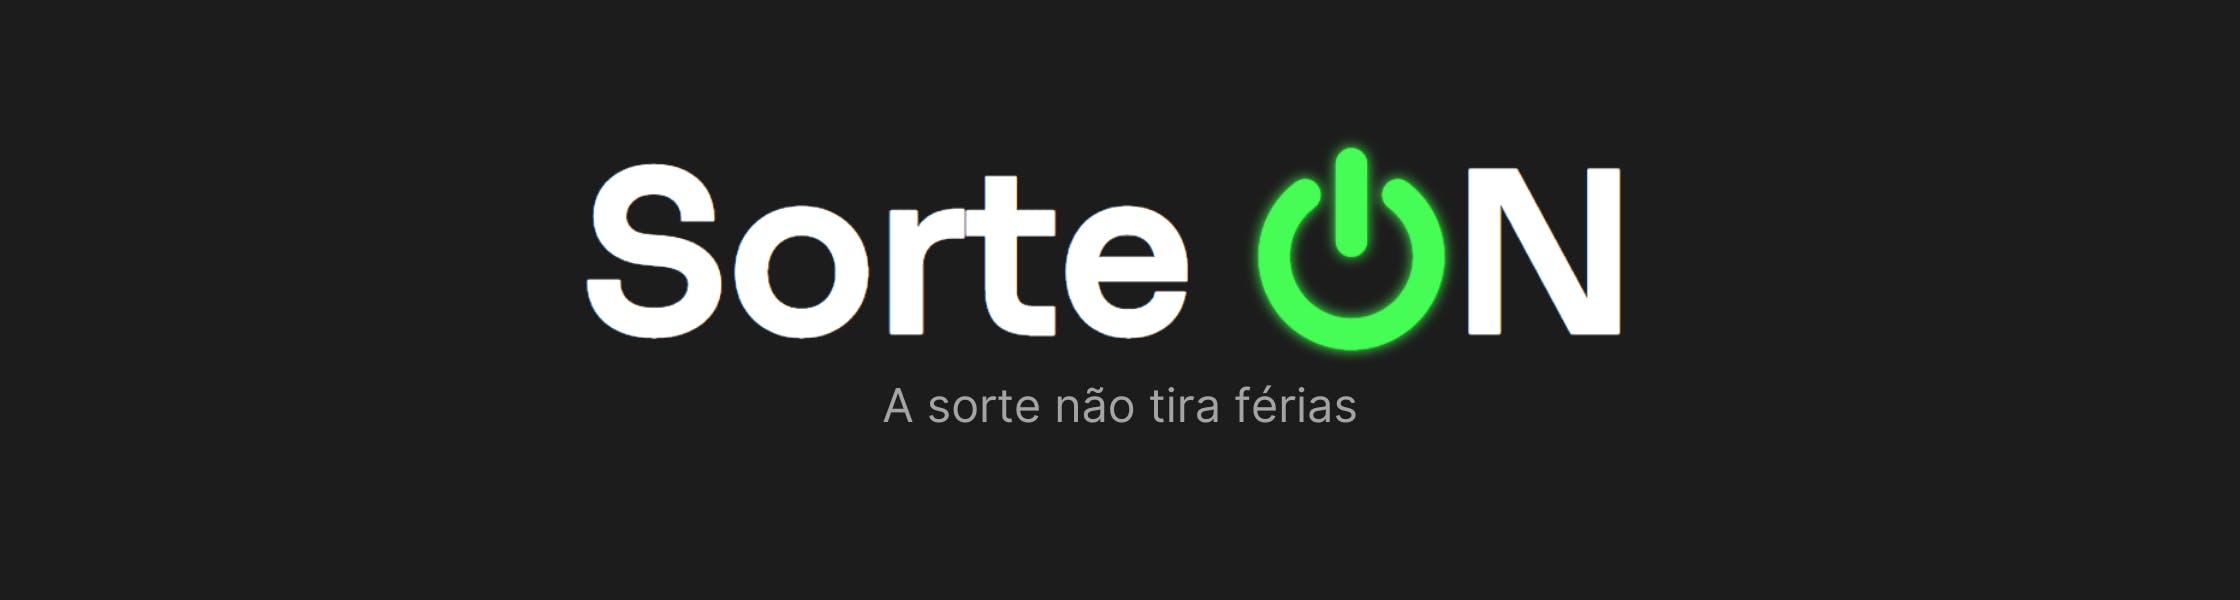 (c) Sorteon.com.br